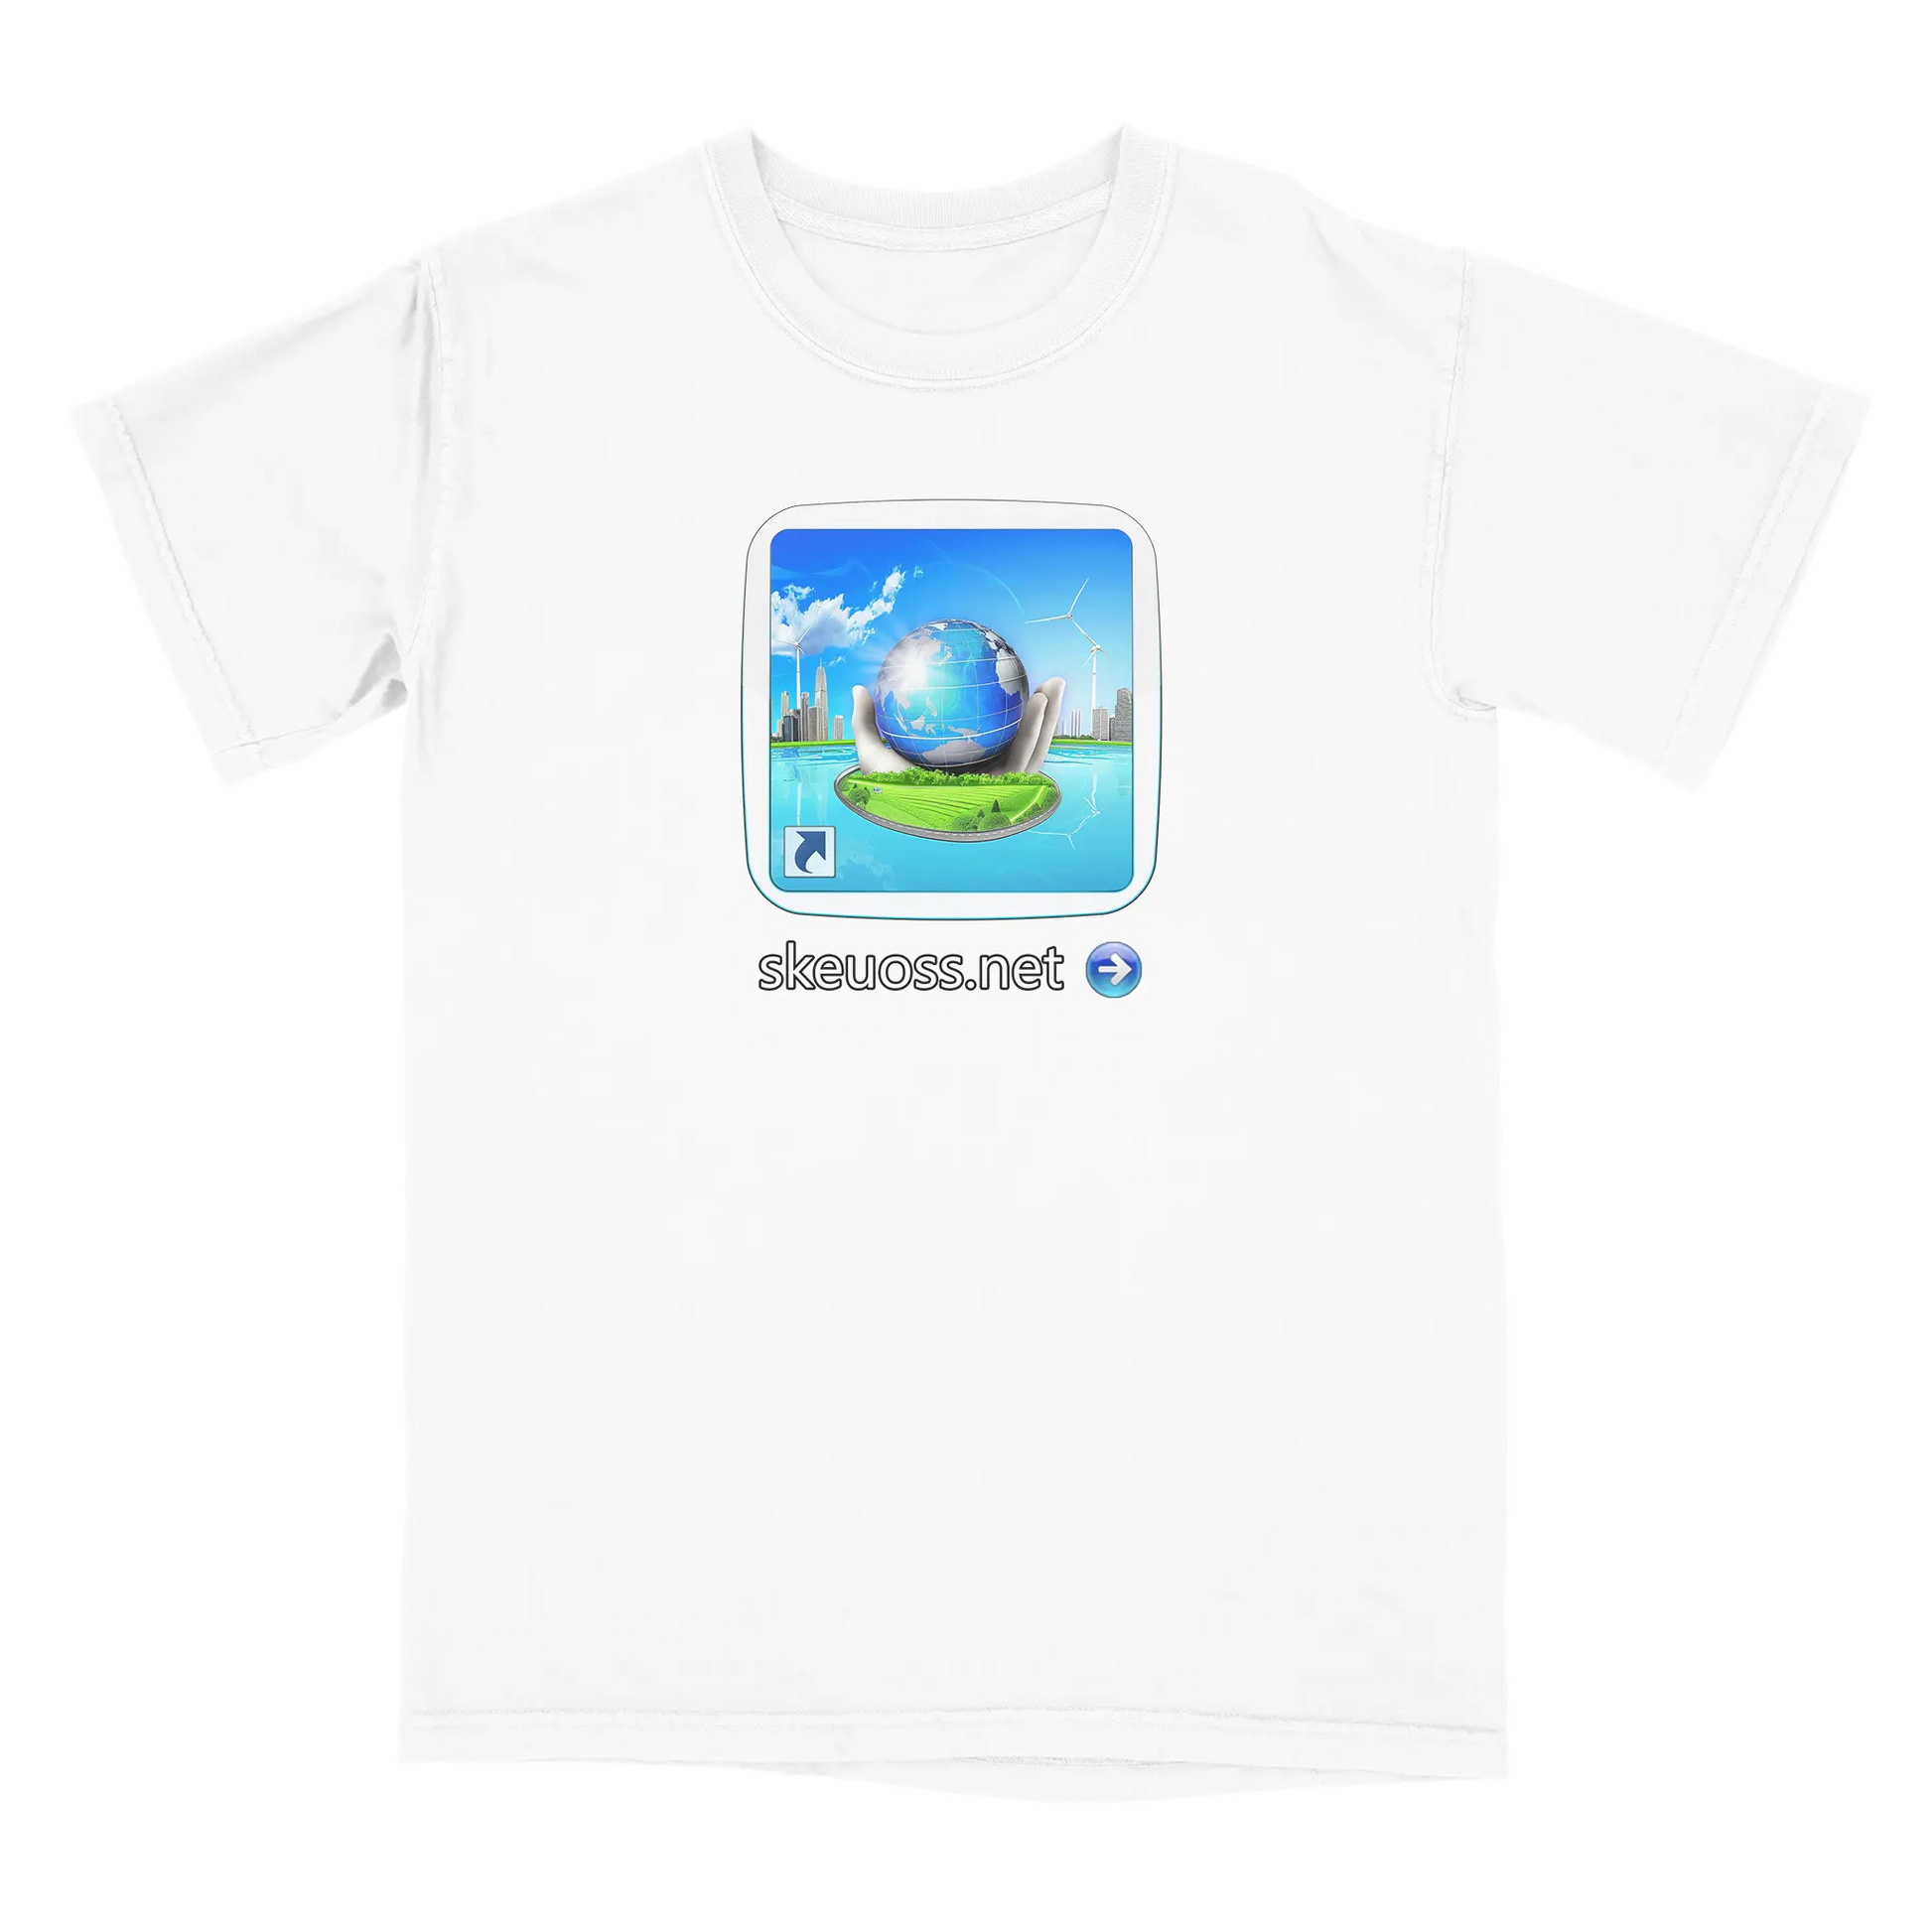 Frutiger Aero T-shirt - User Login Collection - User 158